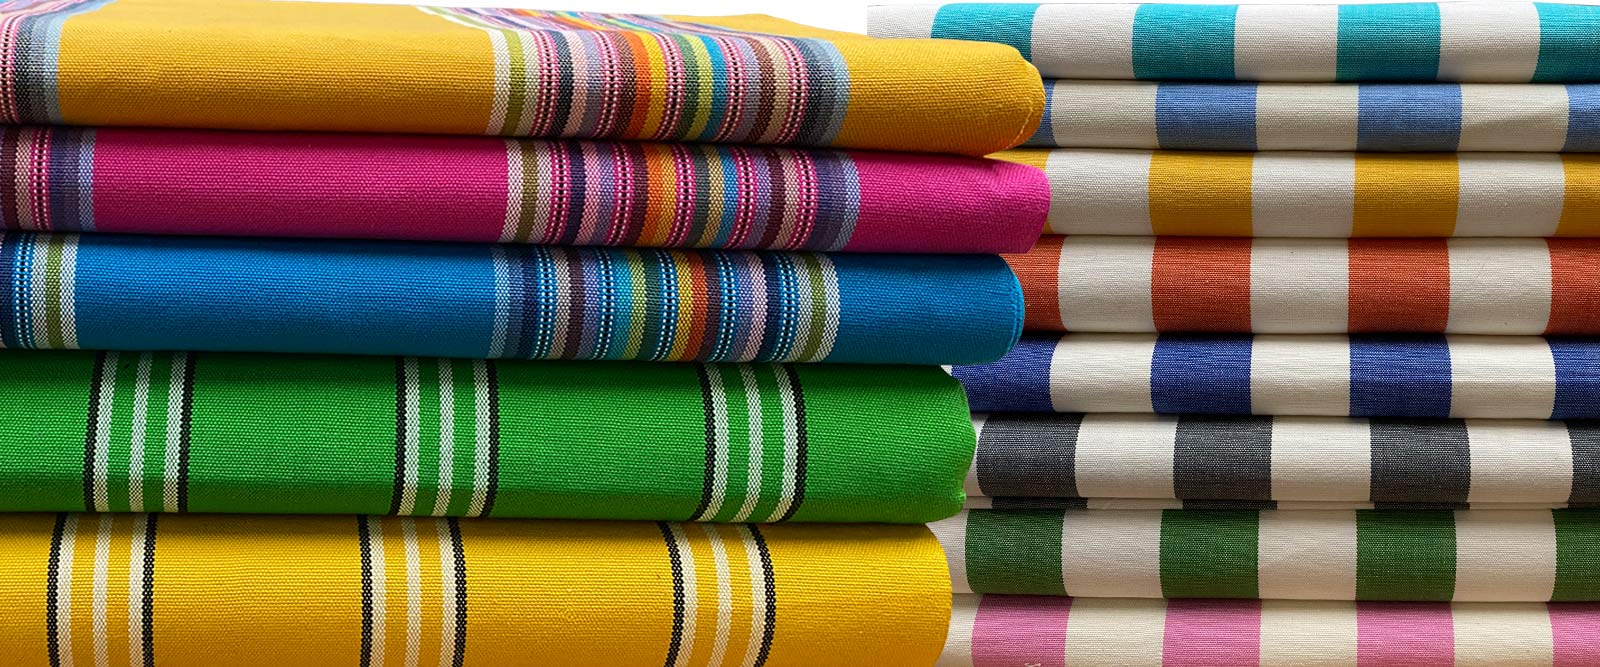 Grey and White Stripe Deckchair Fabric